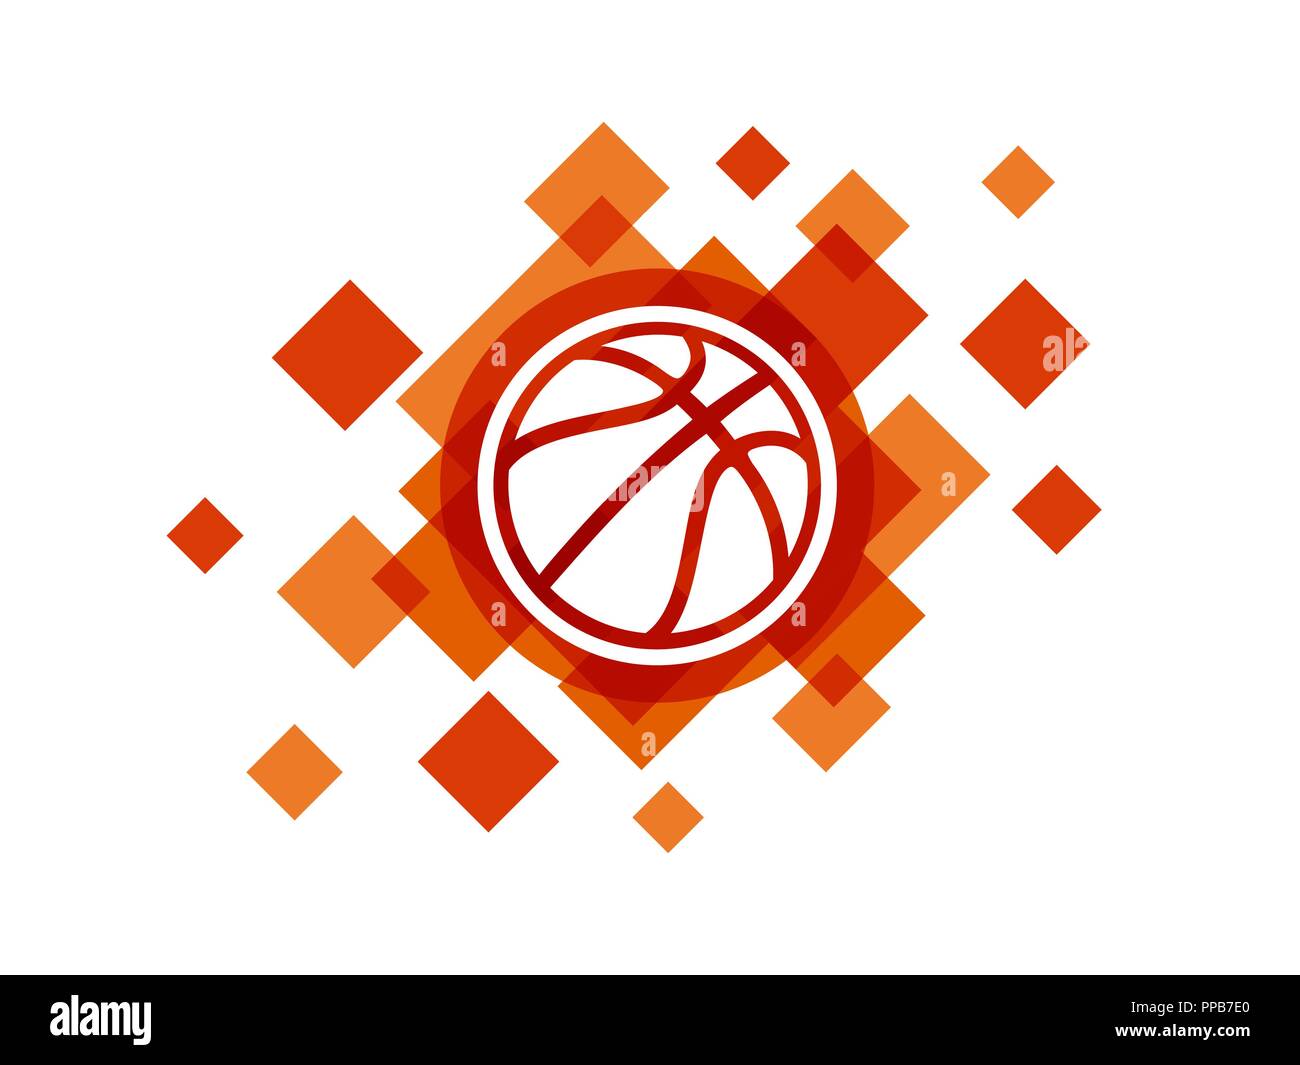 College basketball logo Banque d'images vectorielles - Alamy